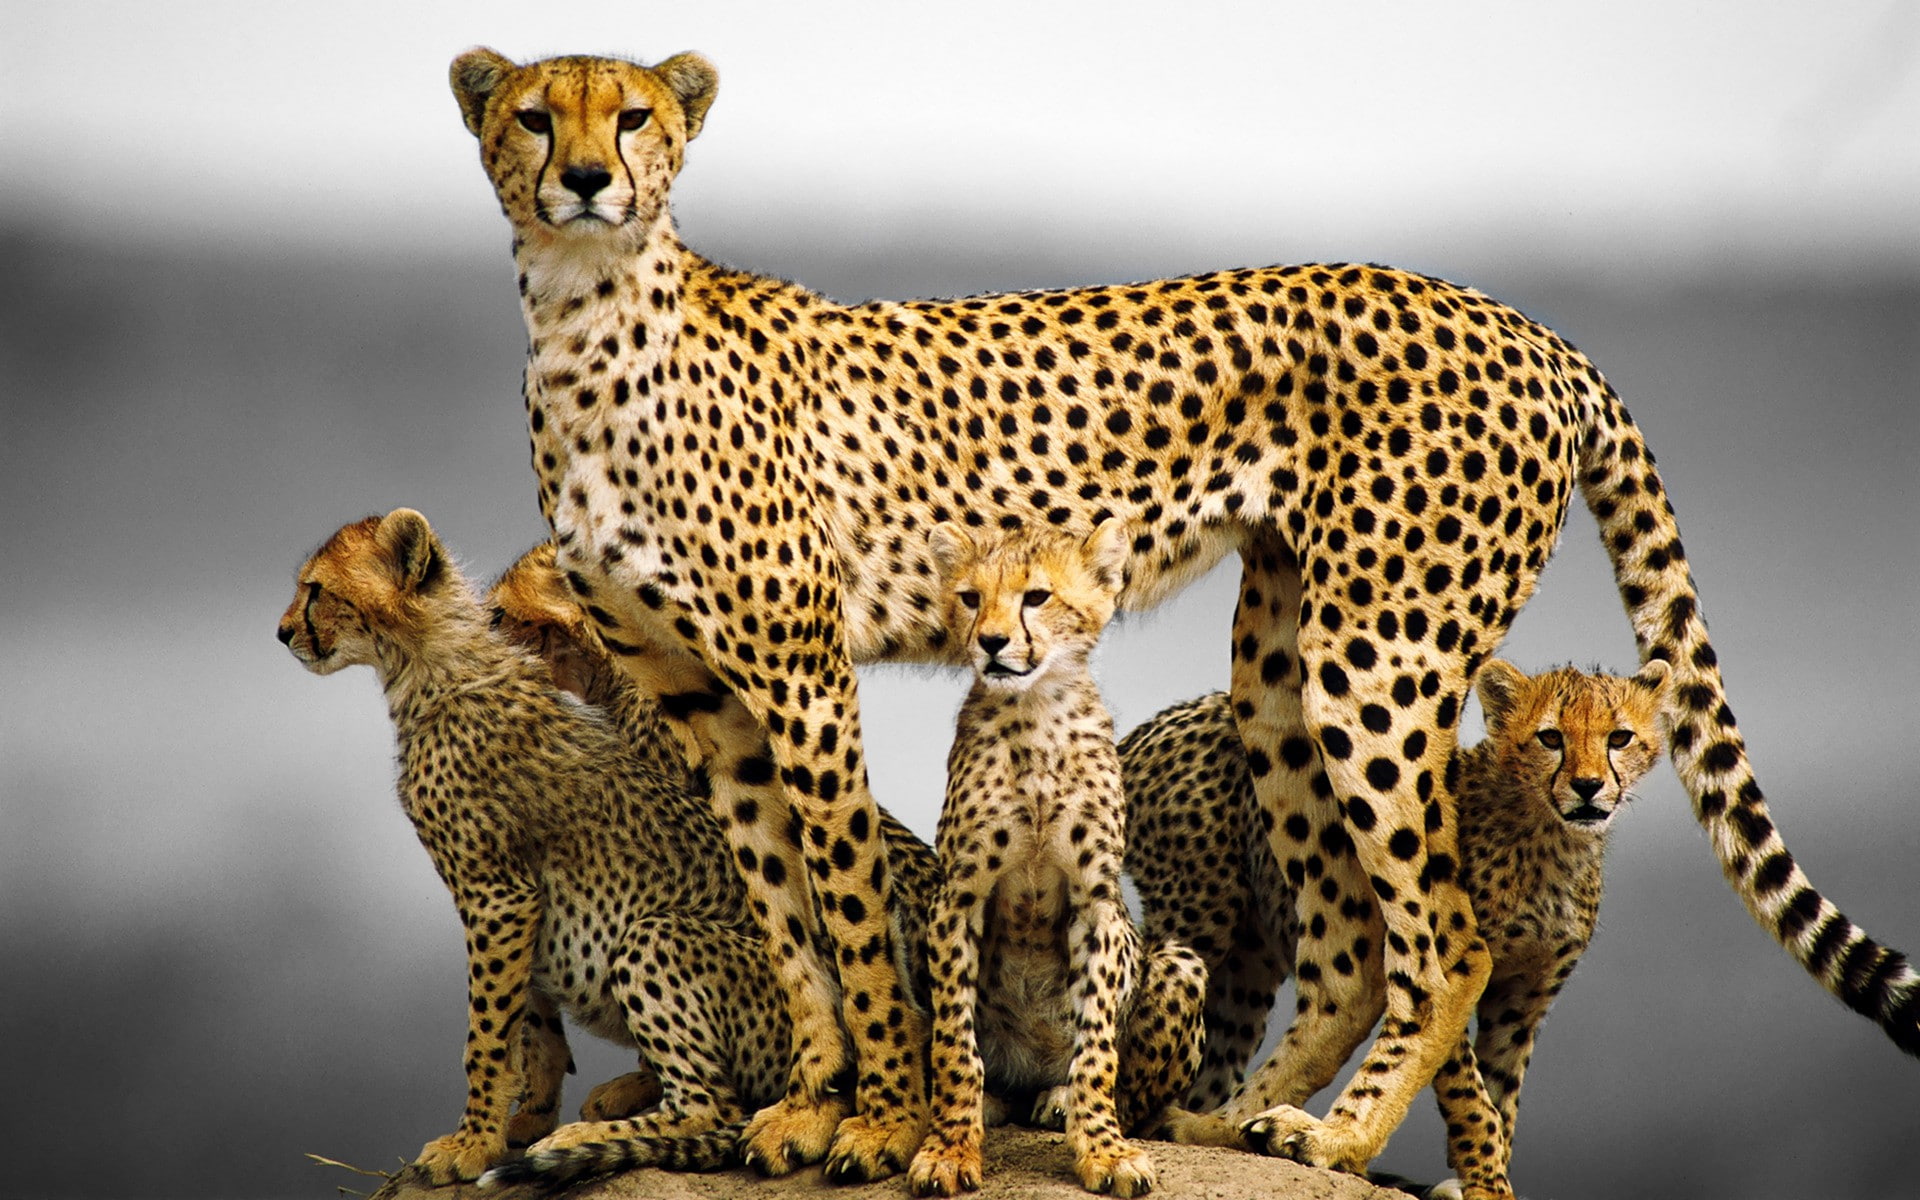 Cheetah family, cheetah with 3 cubs, Cat, kittens